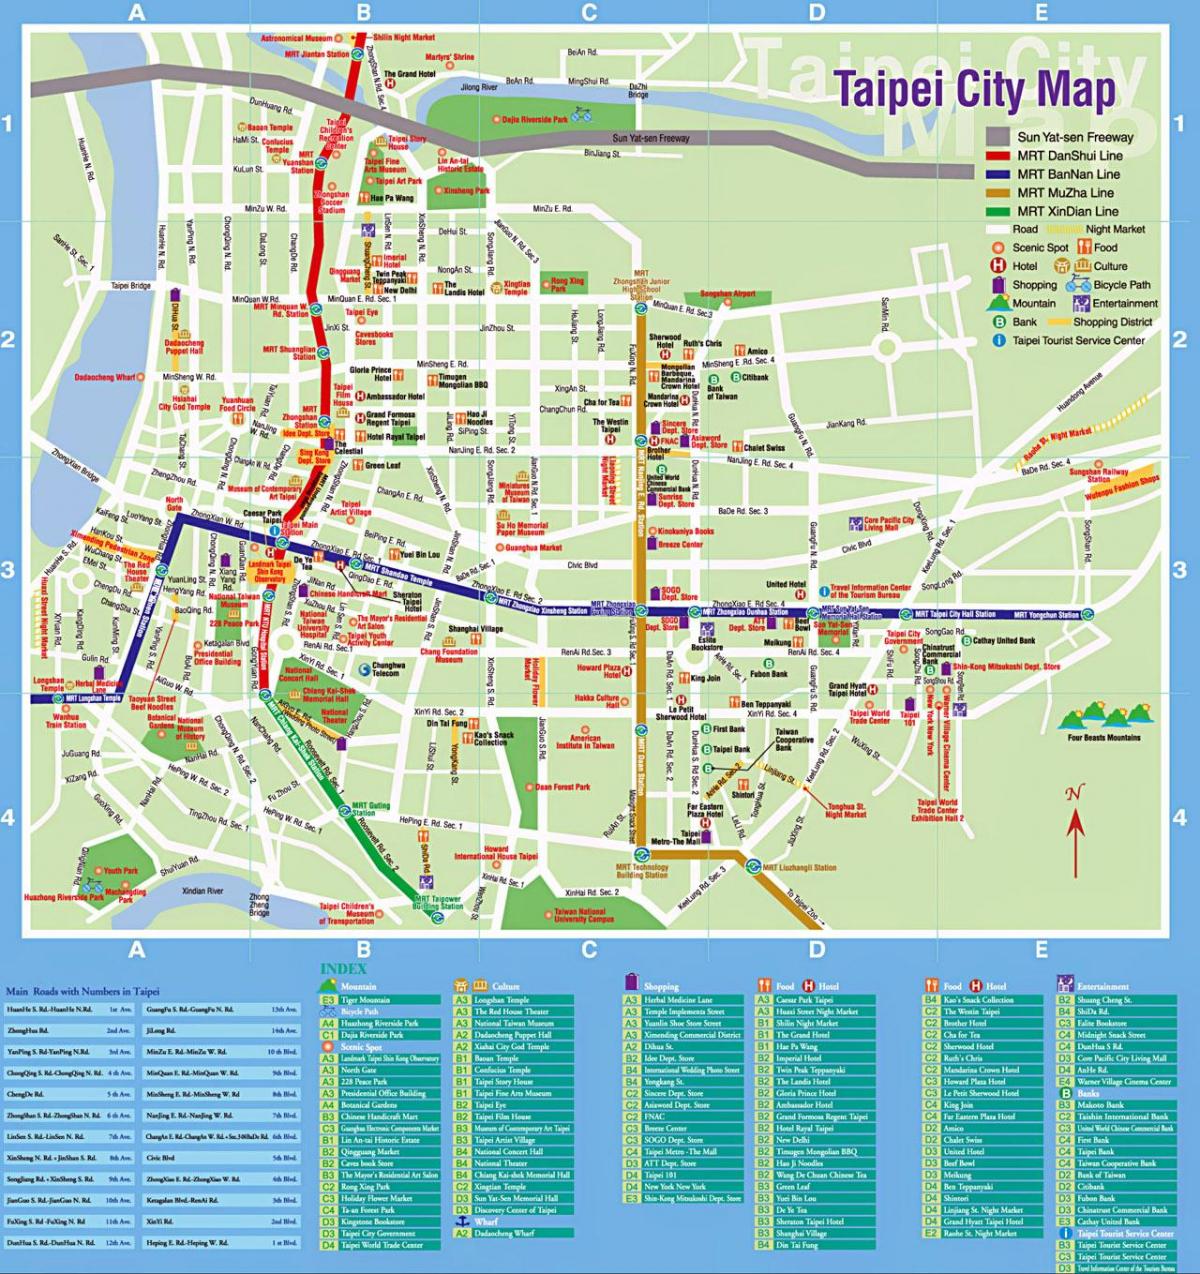 kort over Taipei city tourist